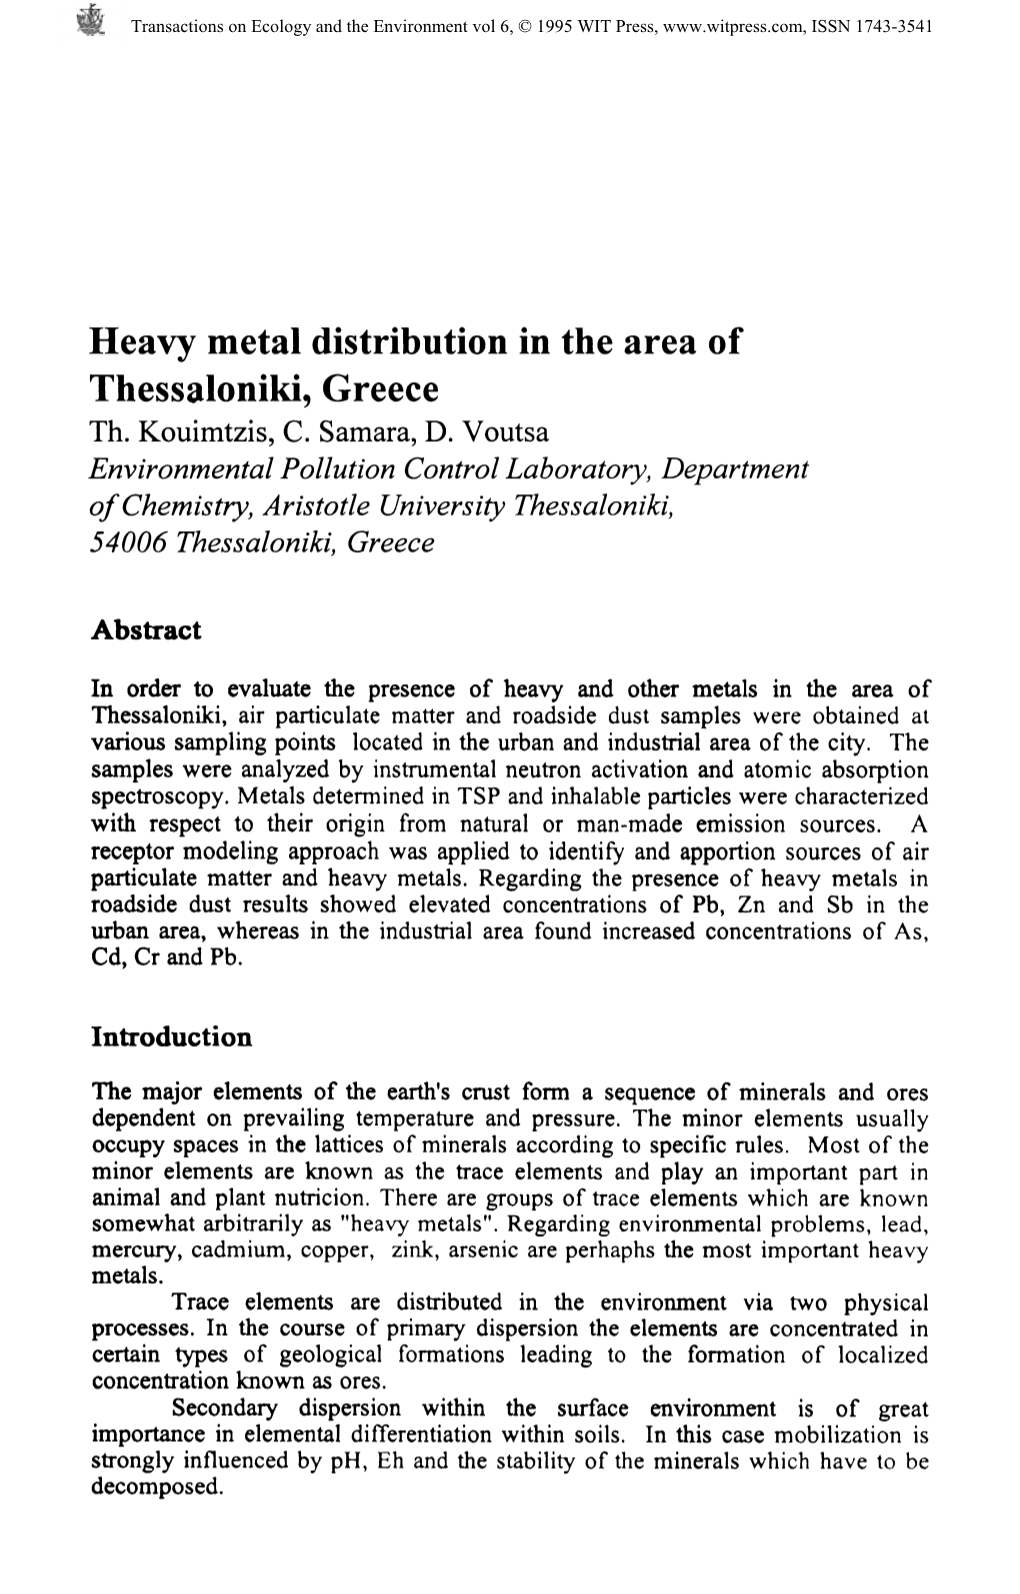 Heavy Metal Distribution in the Area of Thessaloniki, Greece Th. Kouimtzis